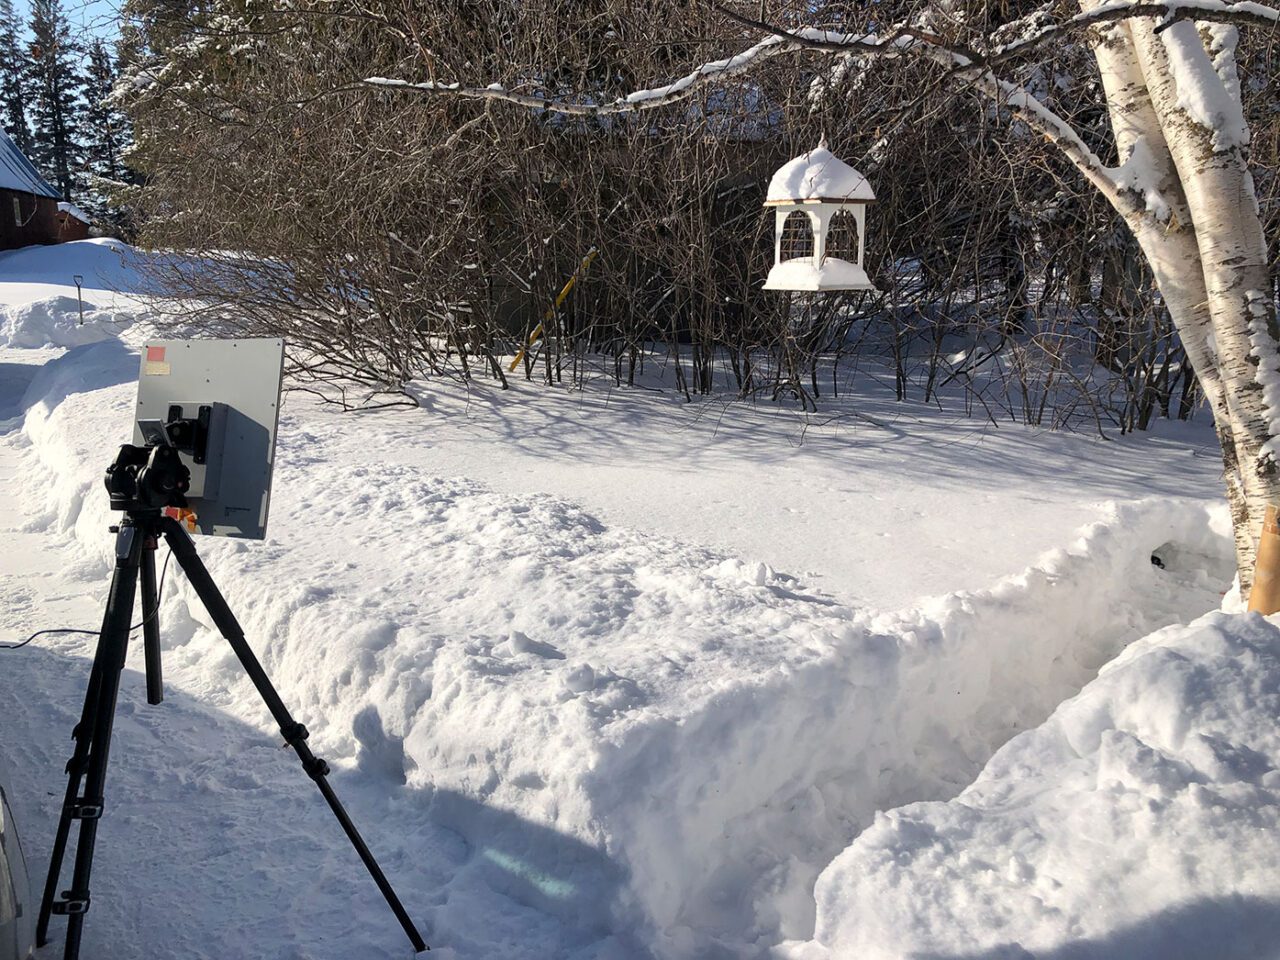 Strange looking camera ponied towards the snowy ground.